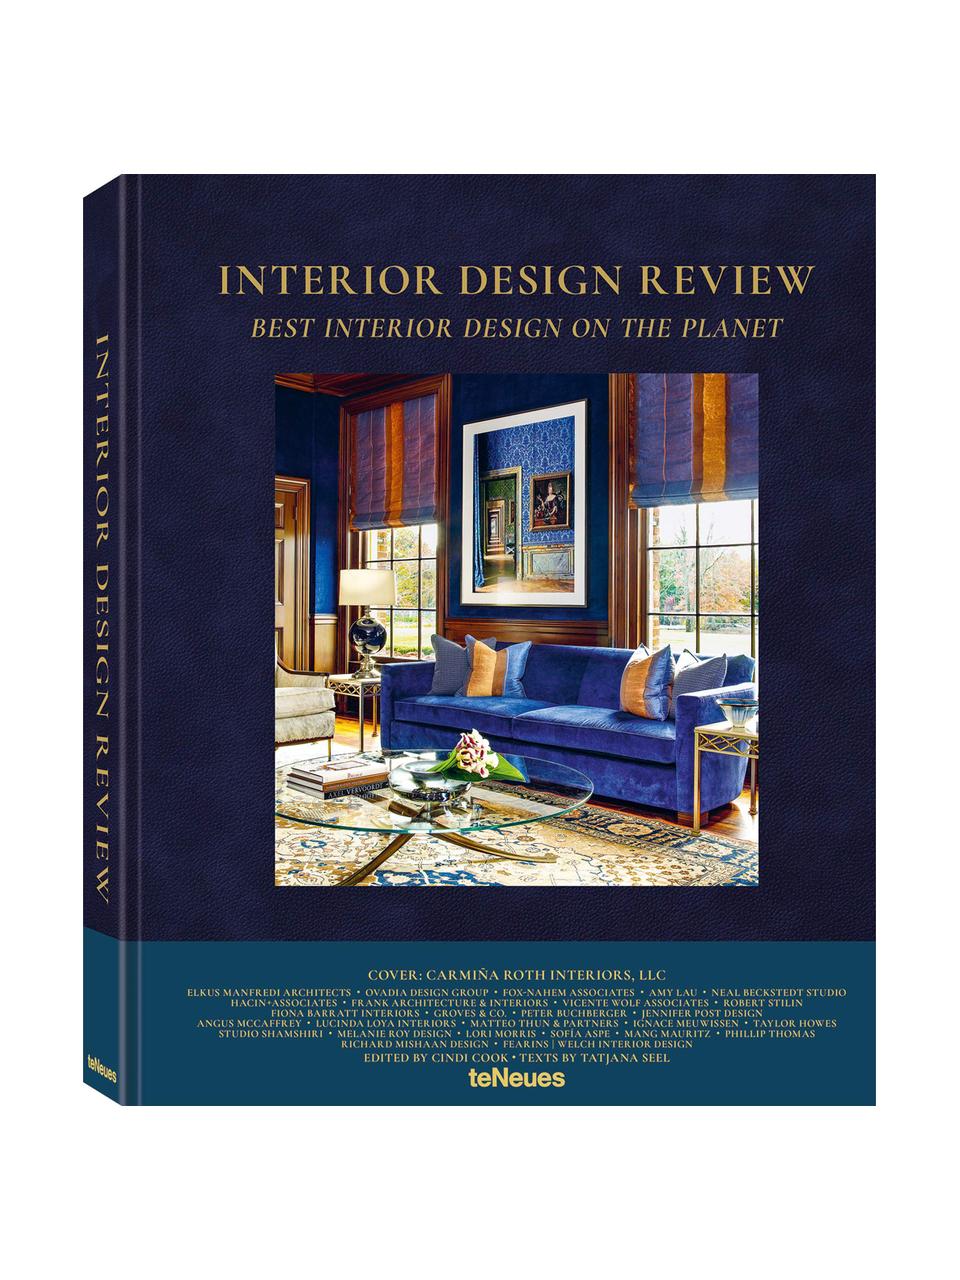 Bildband Interior Design Review, Papier, Hardcover, Mehrfarbig, L 32 x B 25 cm